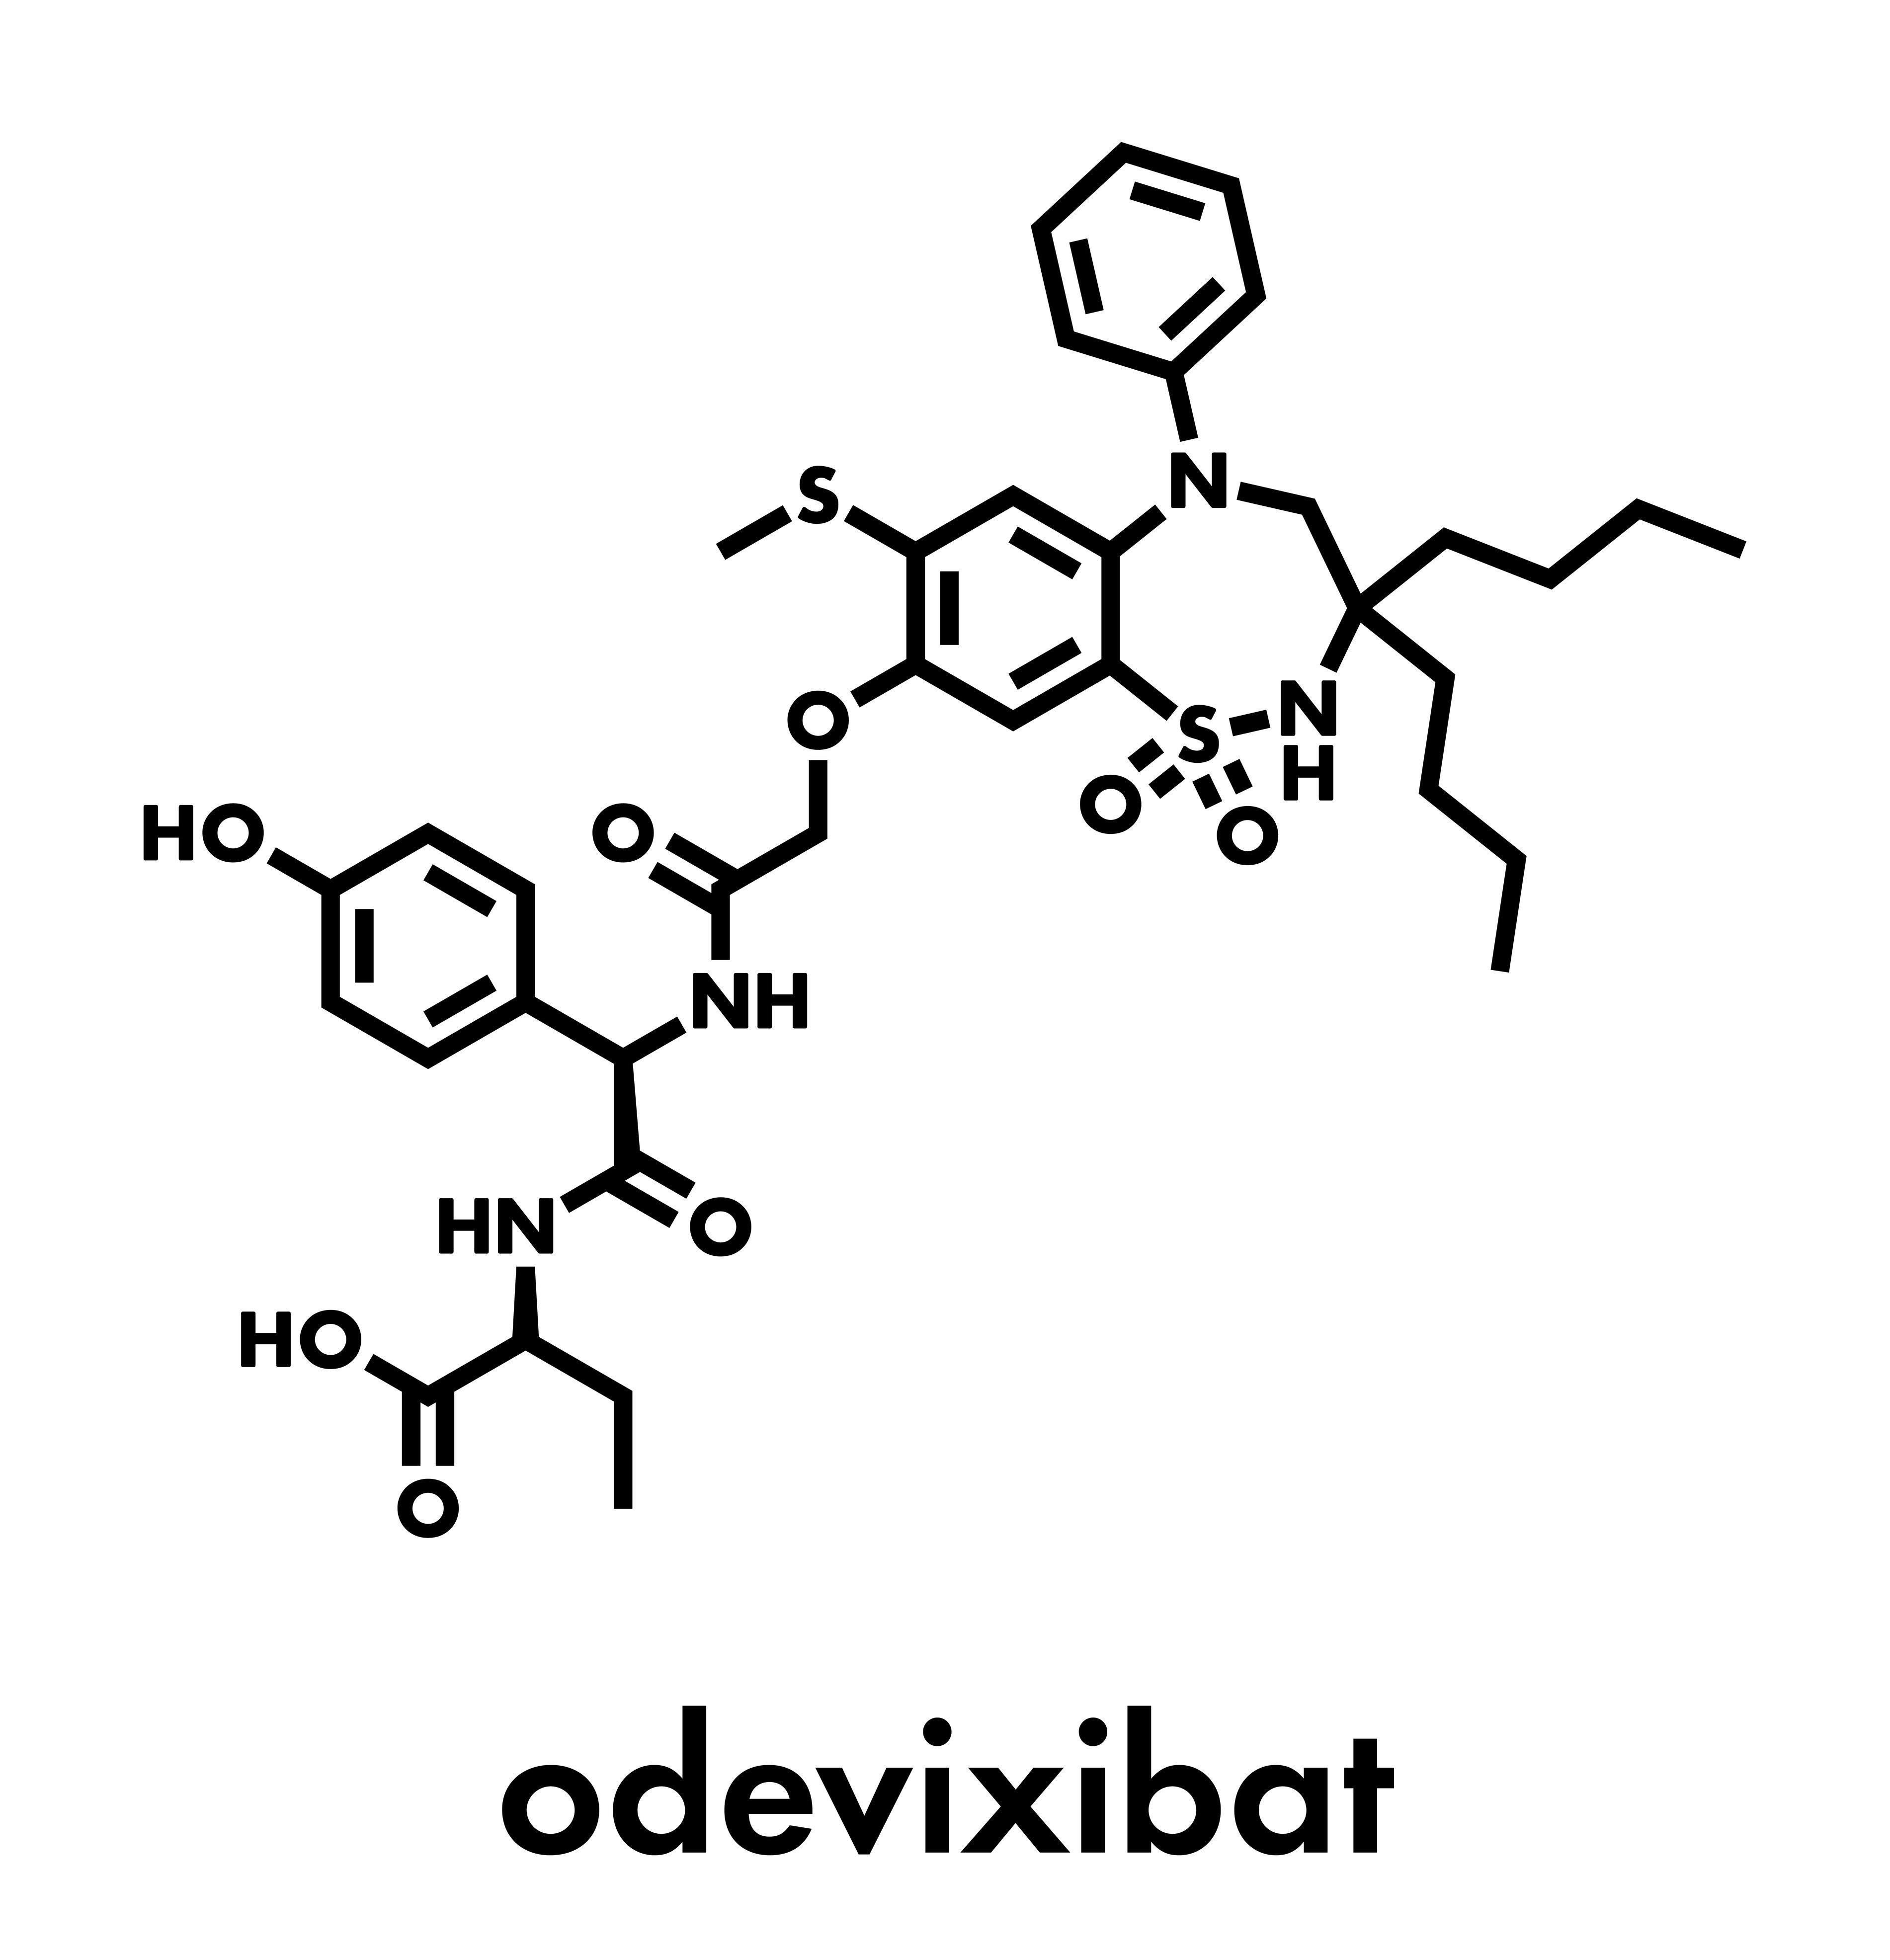 Odevixibat drug molecule. Skeletal formula | Image credit:  molekuul.be - stock.adobe.com